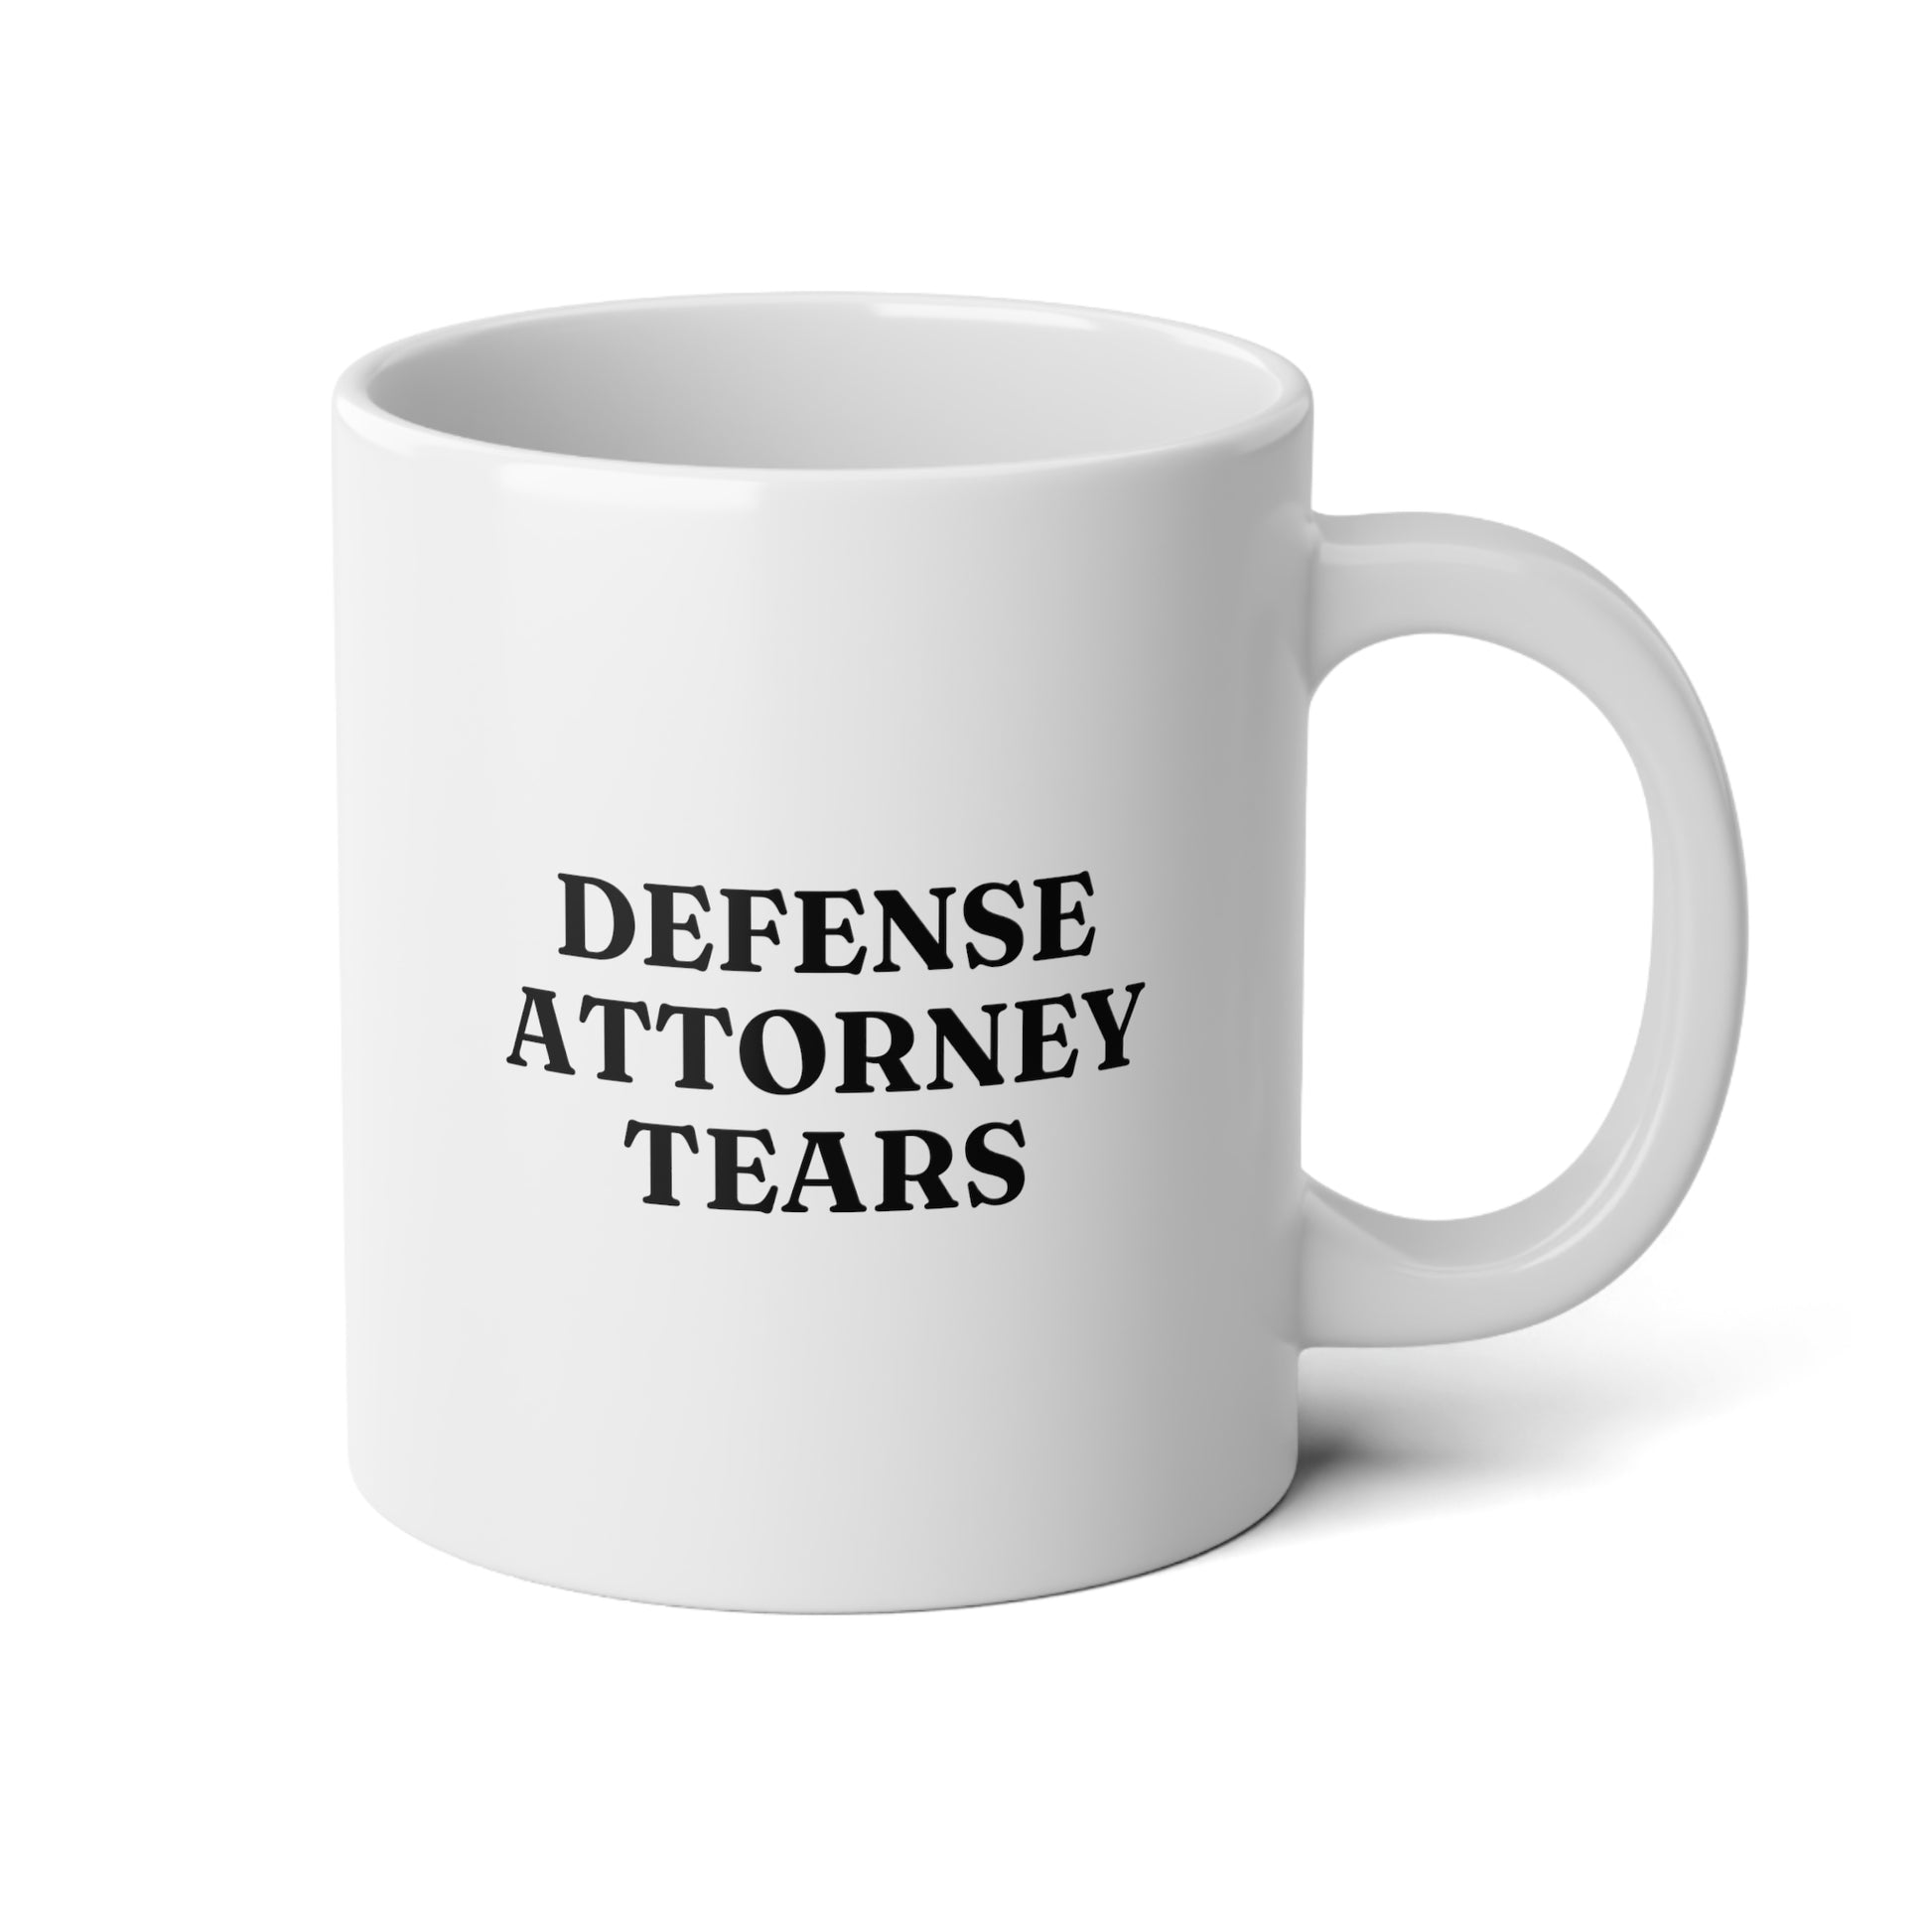 Defense Attorney Tears 20oz white funny large coffee mug gift for prosecutor lawyer attorney plaintiff cup waveywares wavey wares wavywares wavy wares